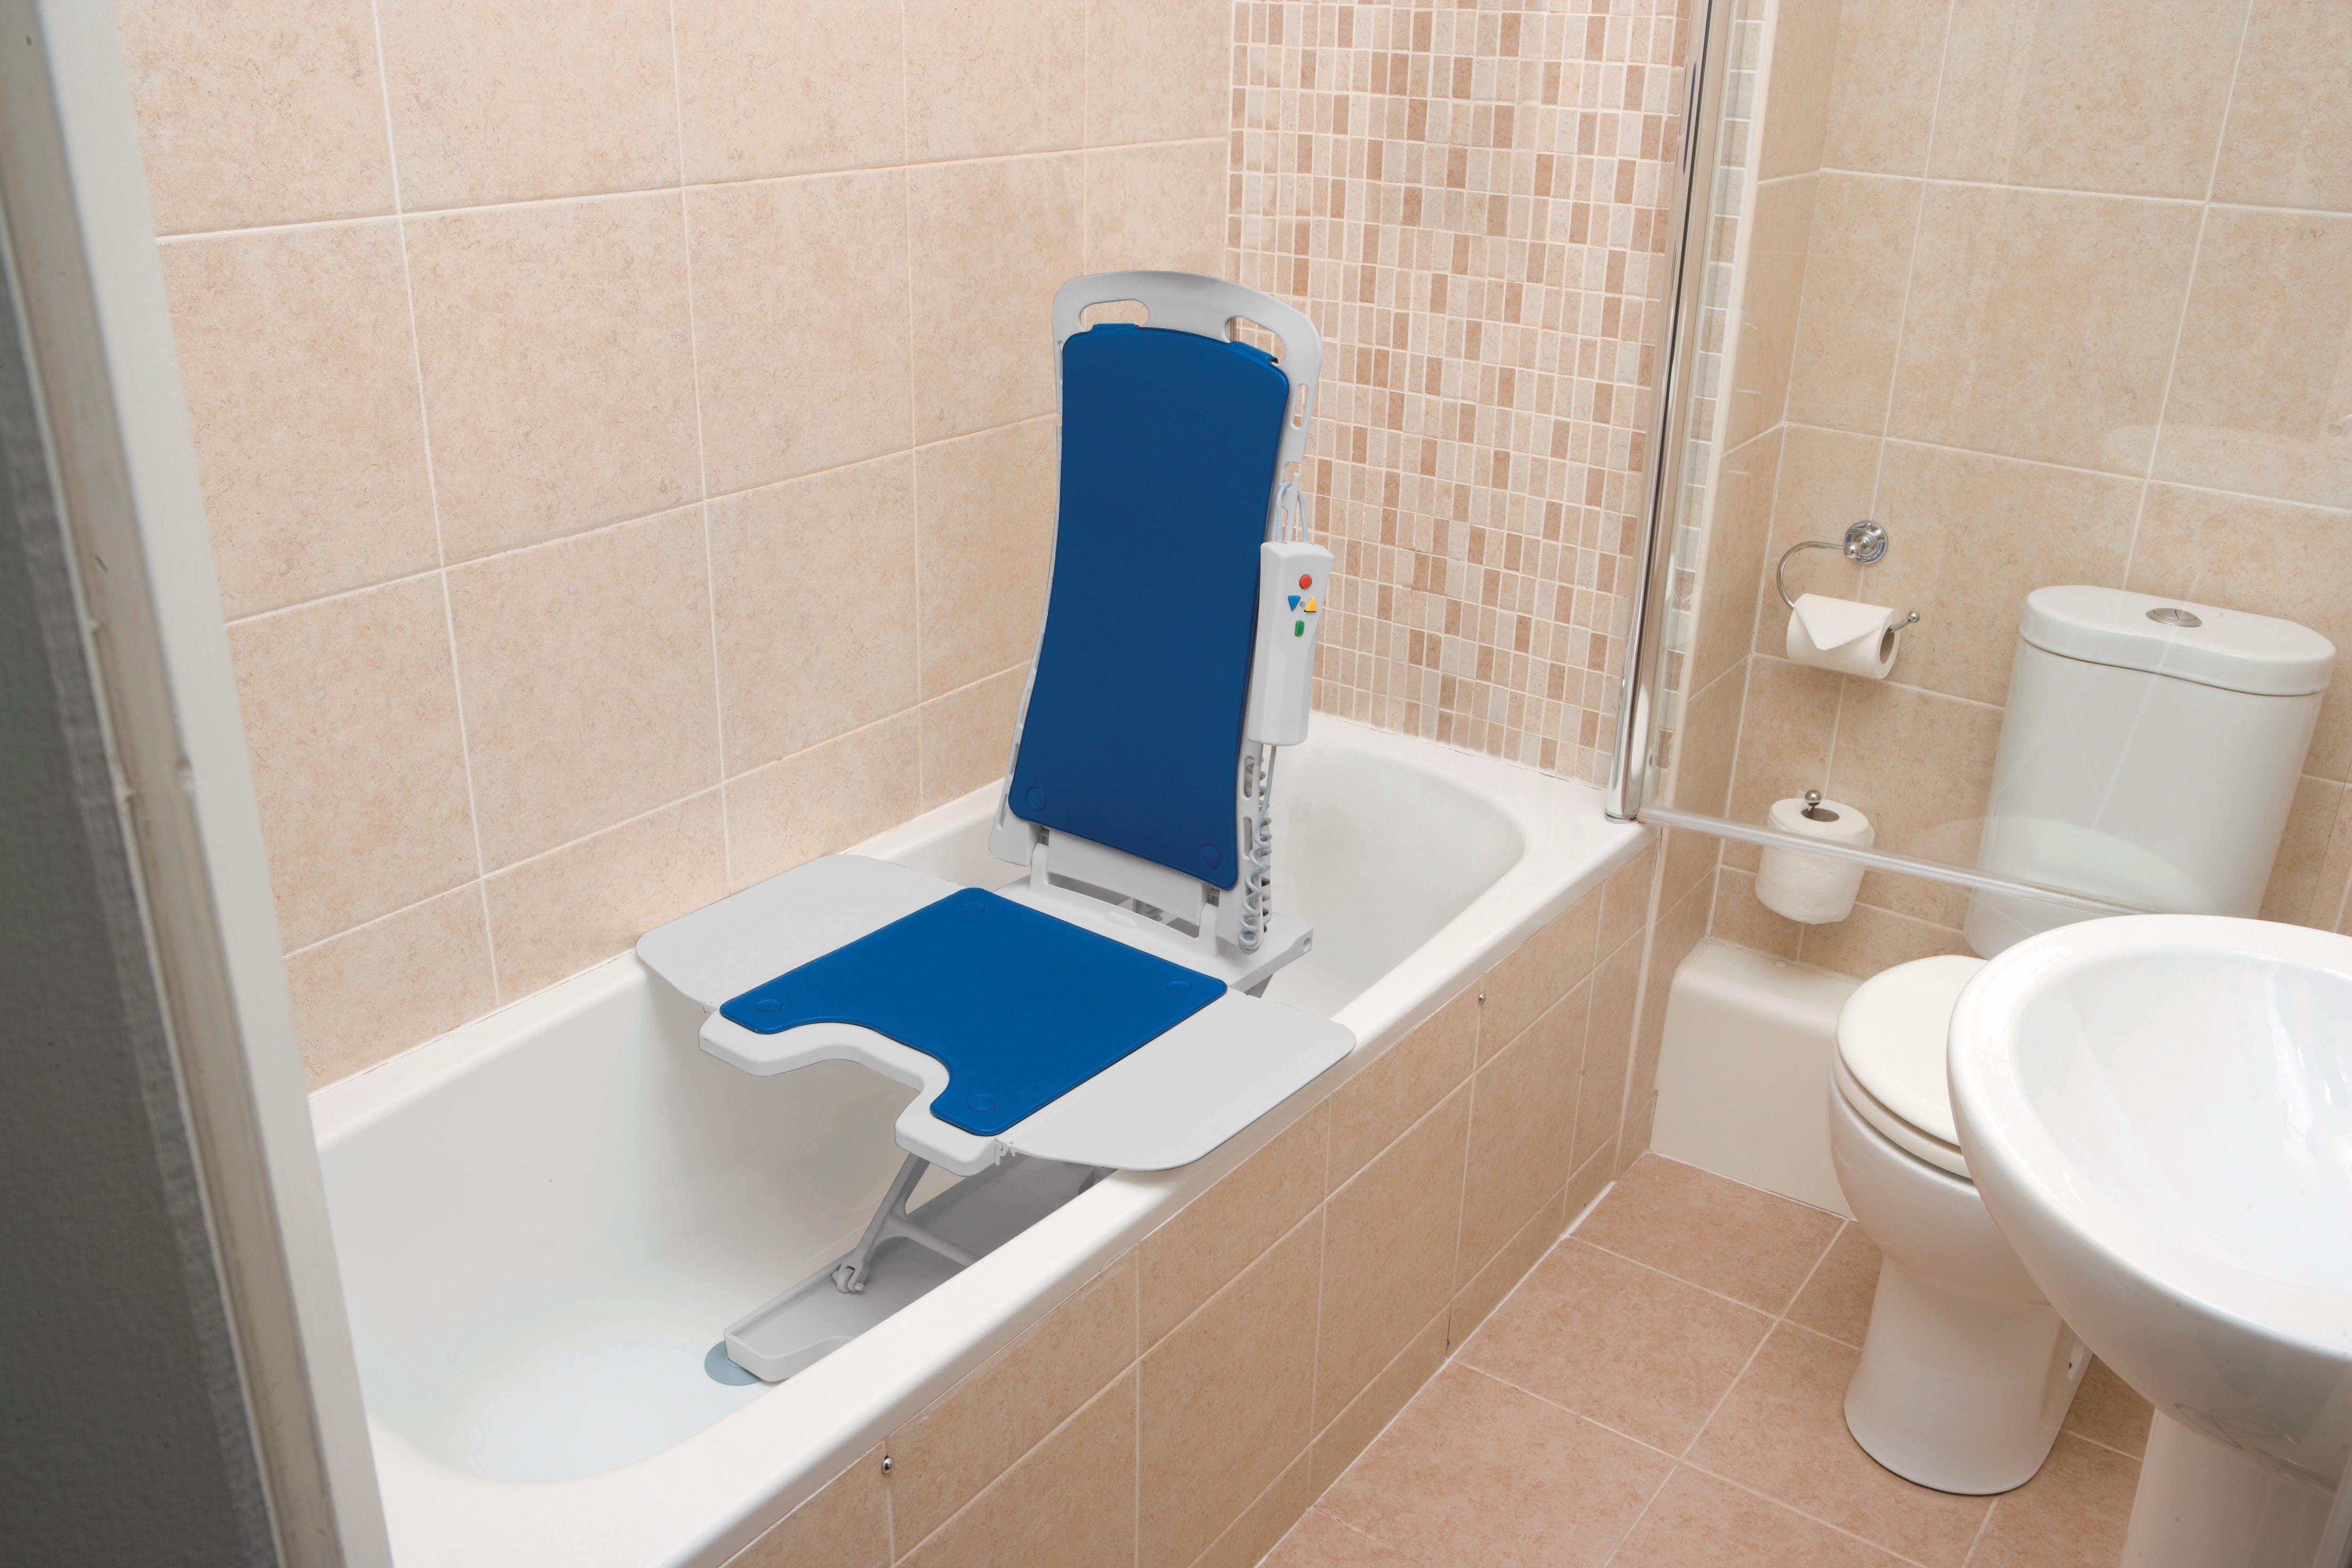 Drive Medical Bathroom Safety Drive Medical Whisper Ultra Quiet Bath Lift, Blue